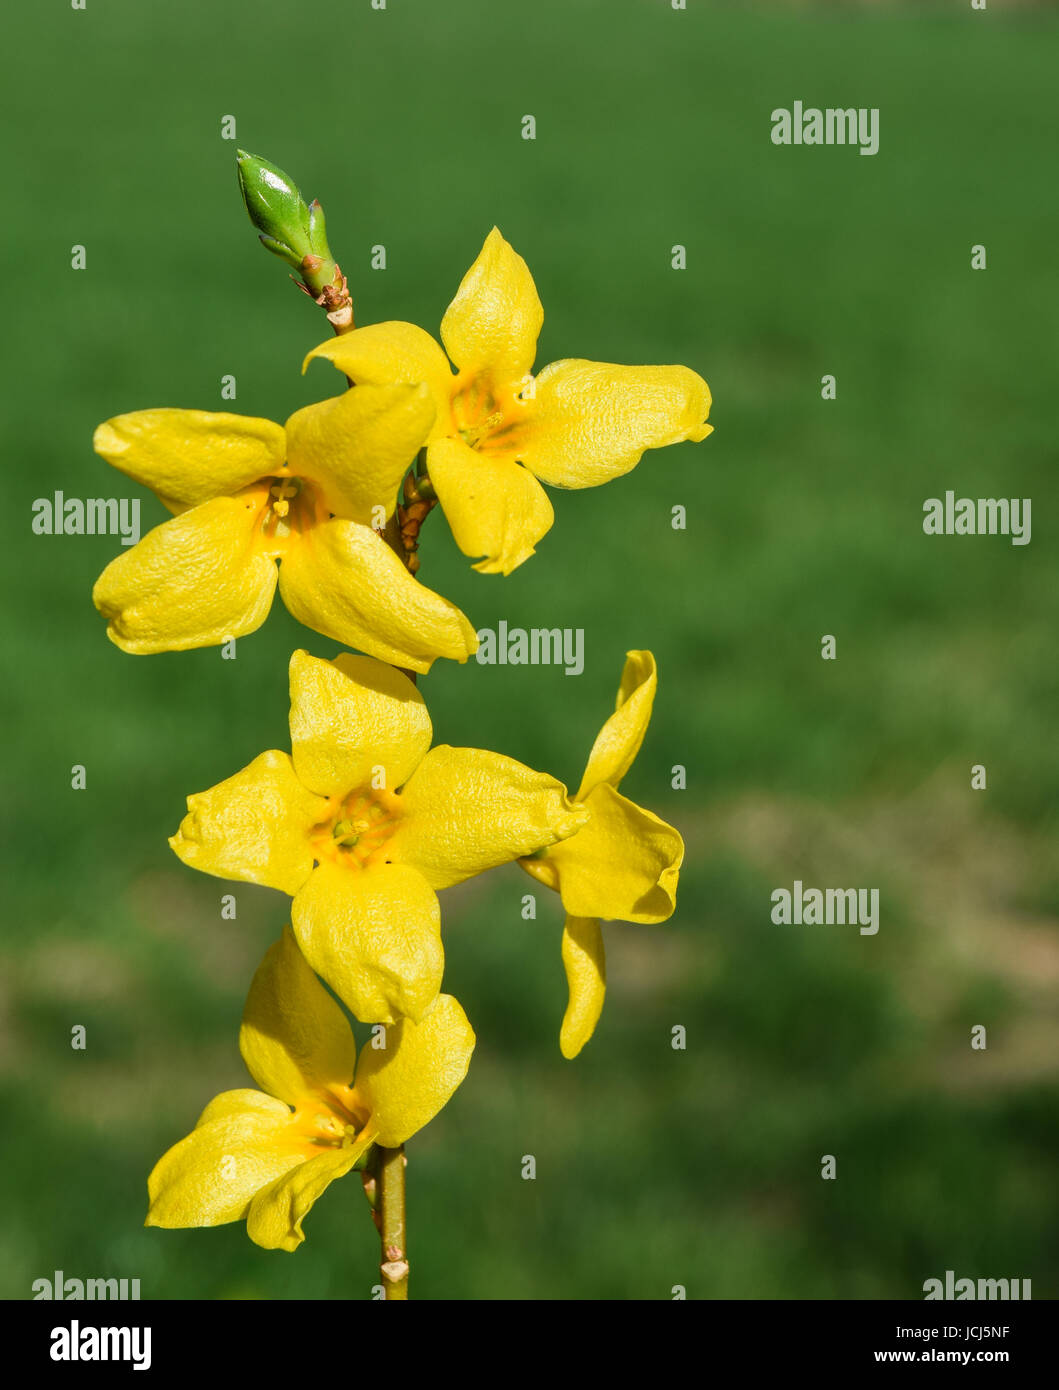 Forsythia flowers, Spring flowering shrub Stock Photo